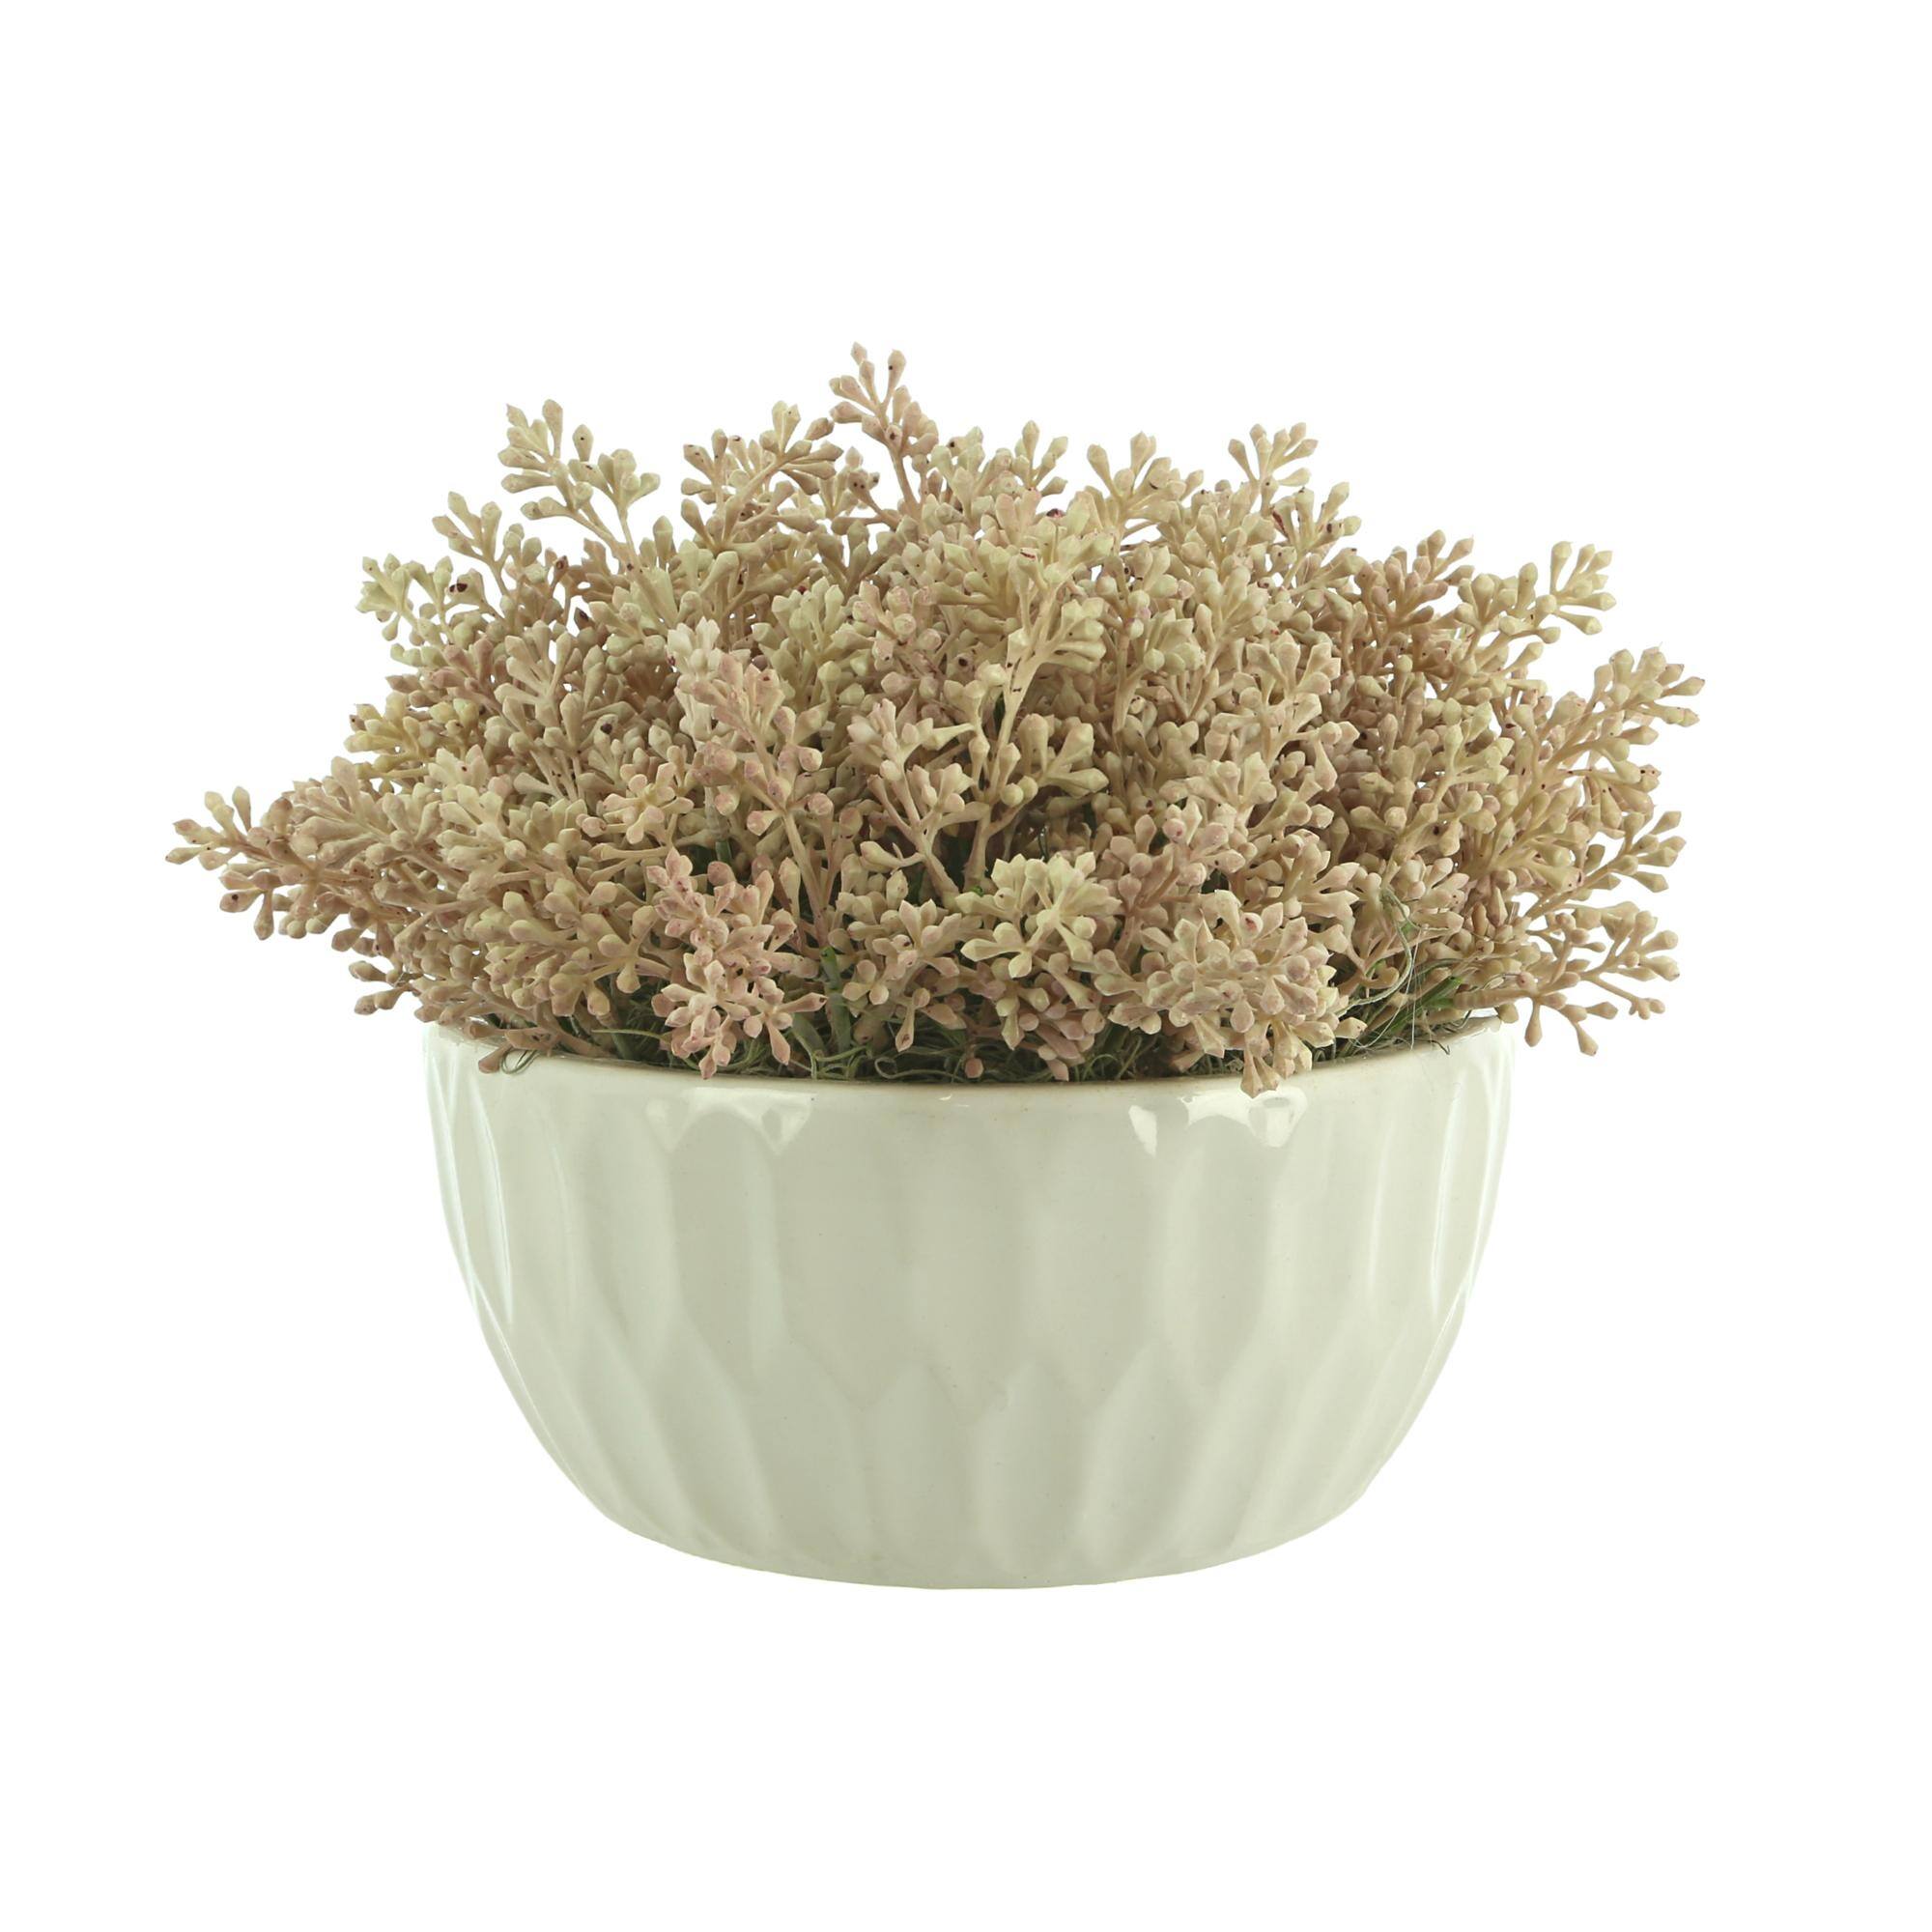 Seeded Eucalyptus Arrangement in Ceramic Vase - Pink, Cream - On Sale ...